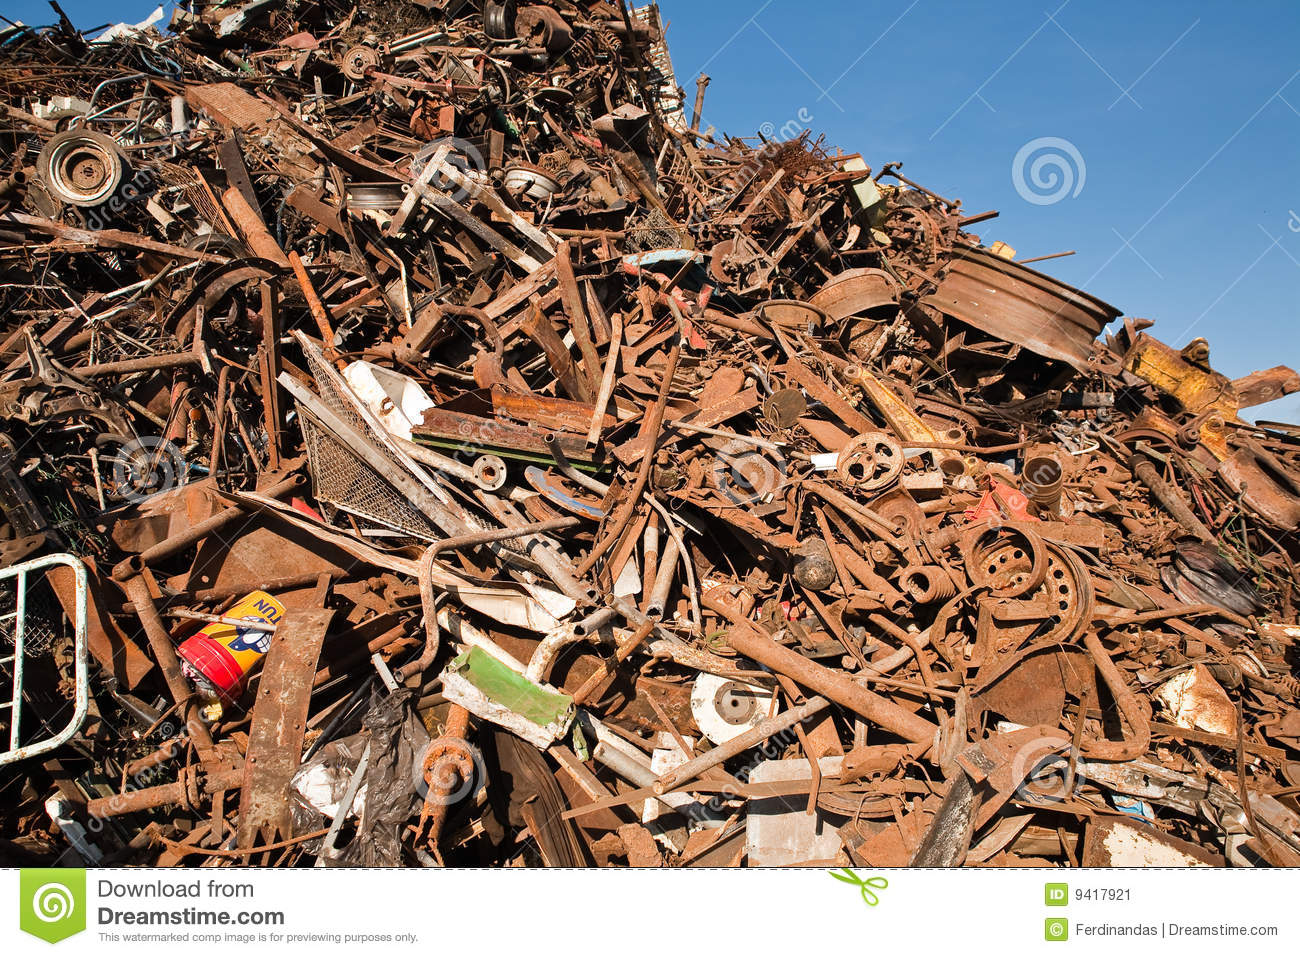 Scrap And Junk Pile Stock Image   Image  9417921